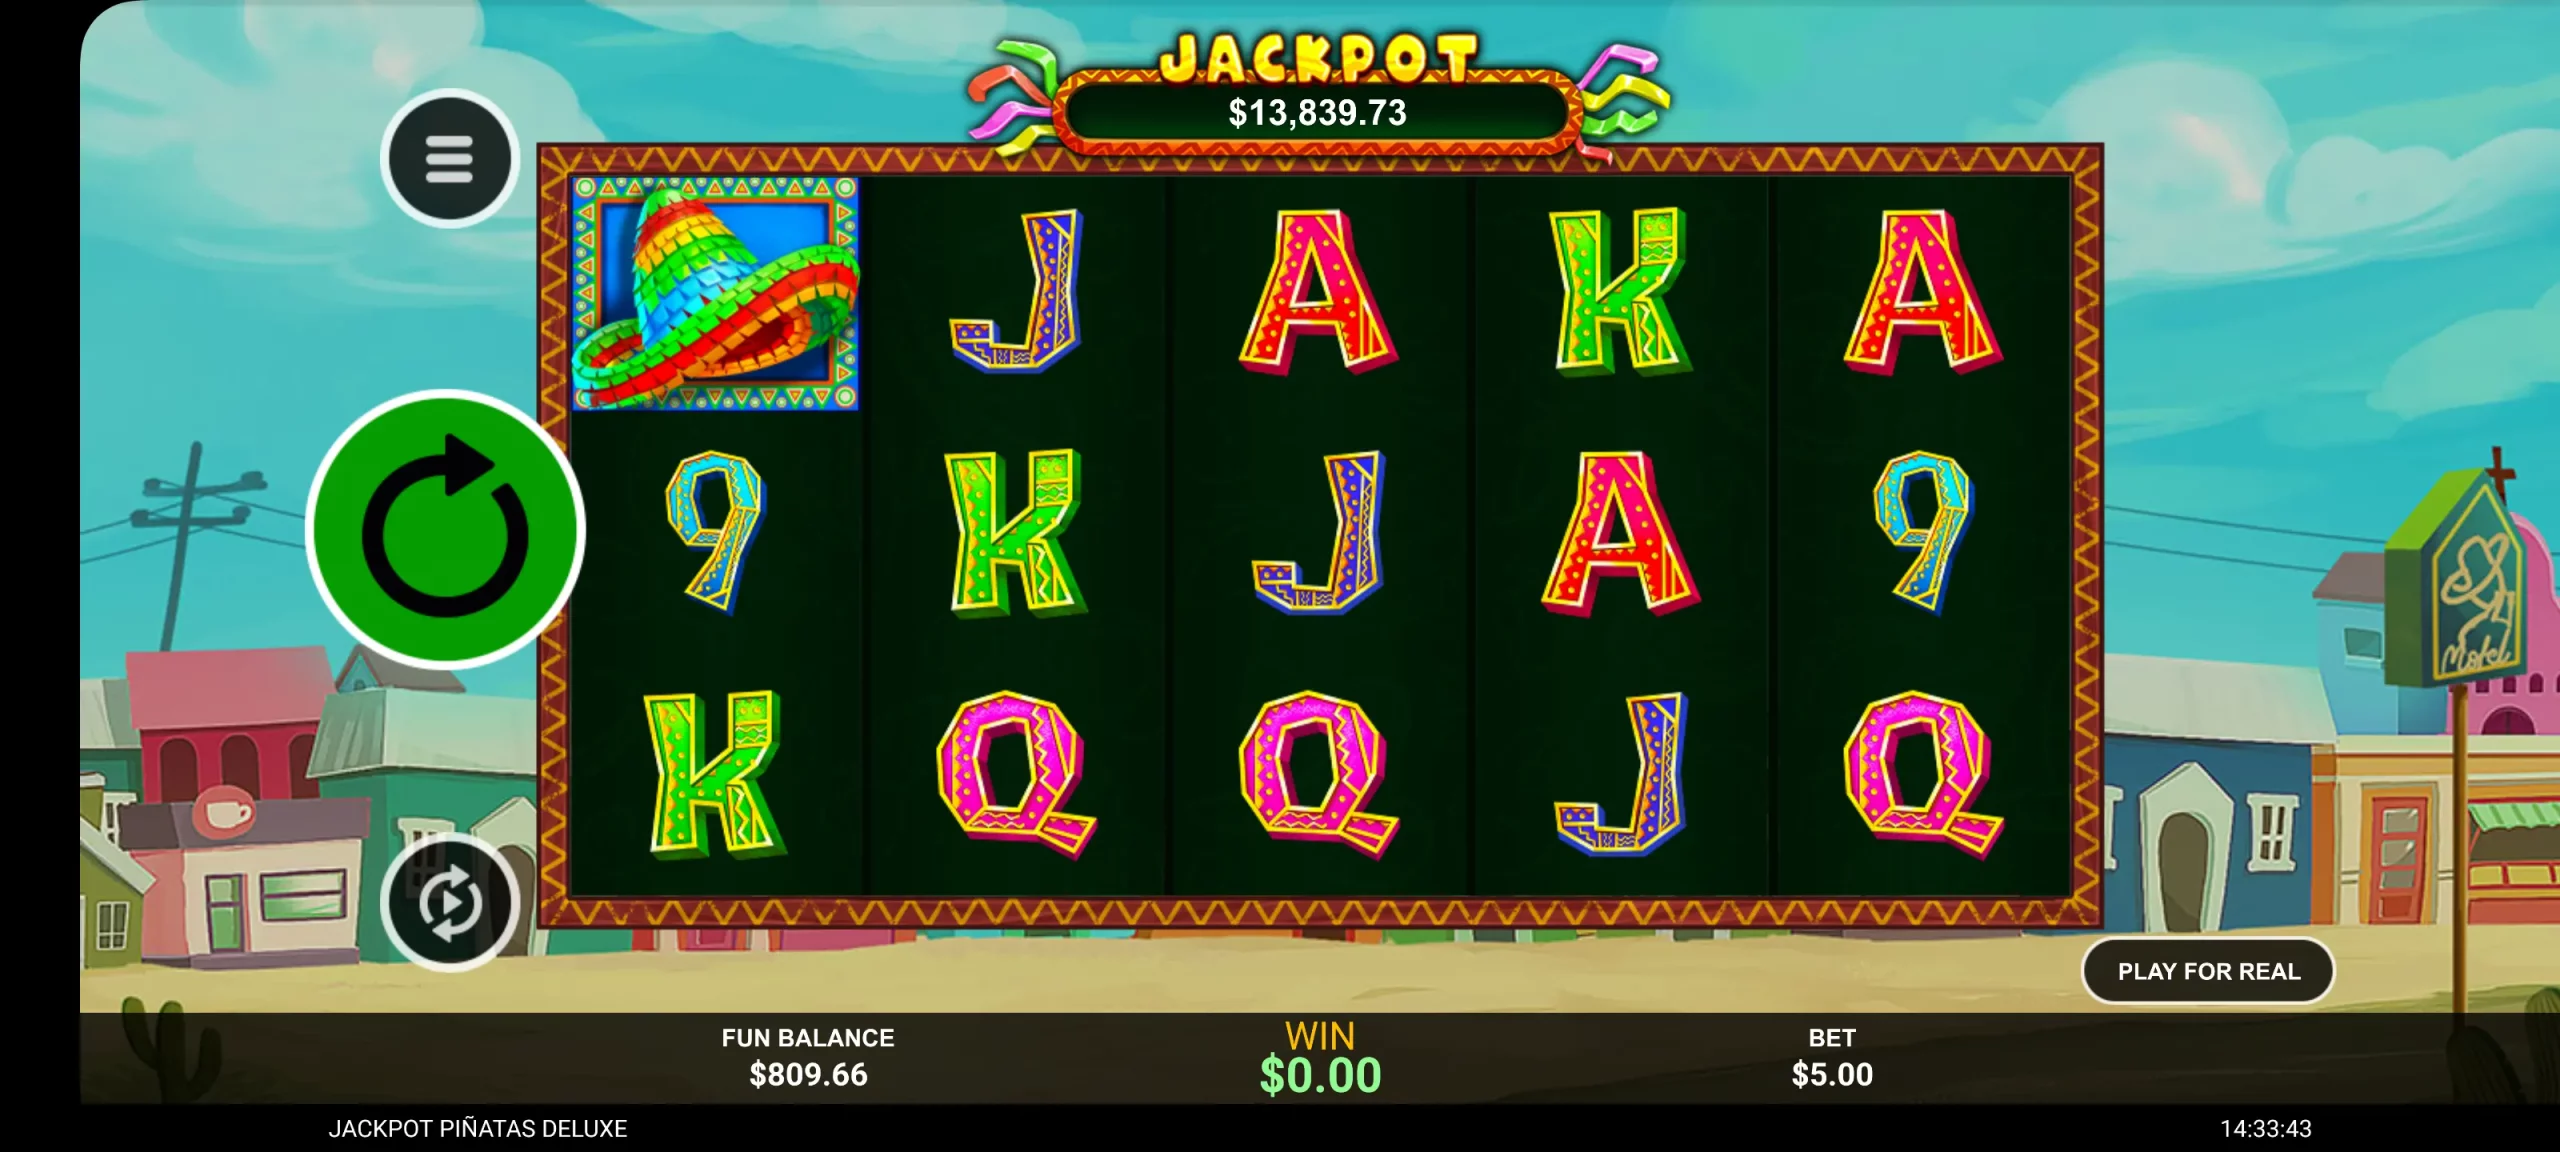 Fair Go casino app screenshot 2